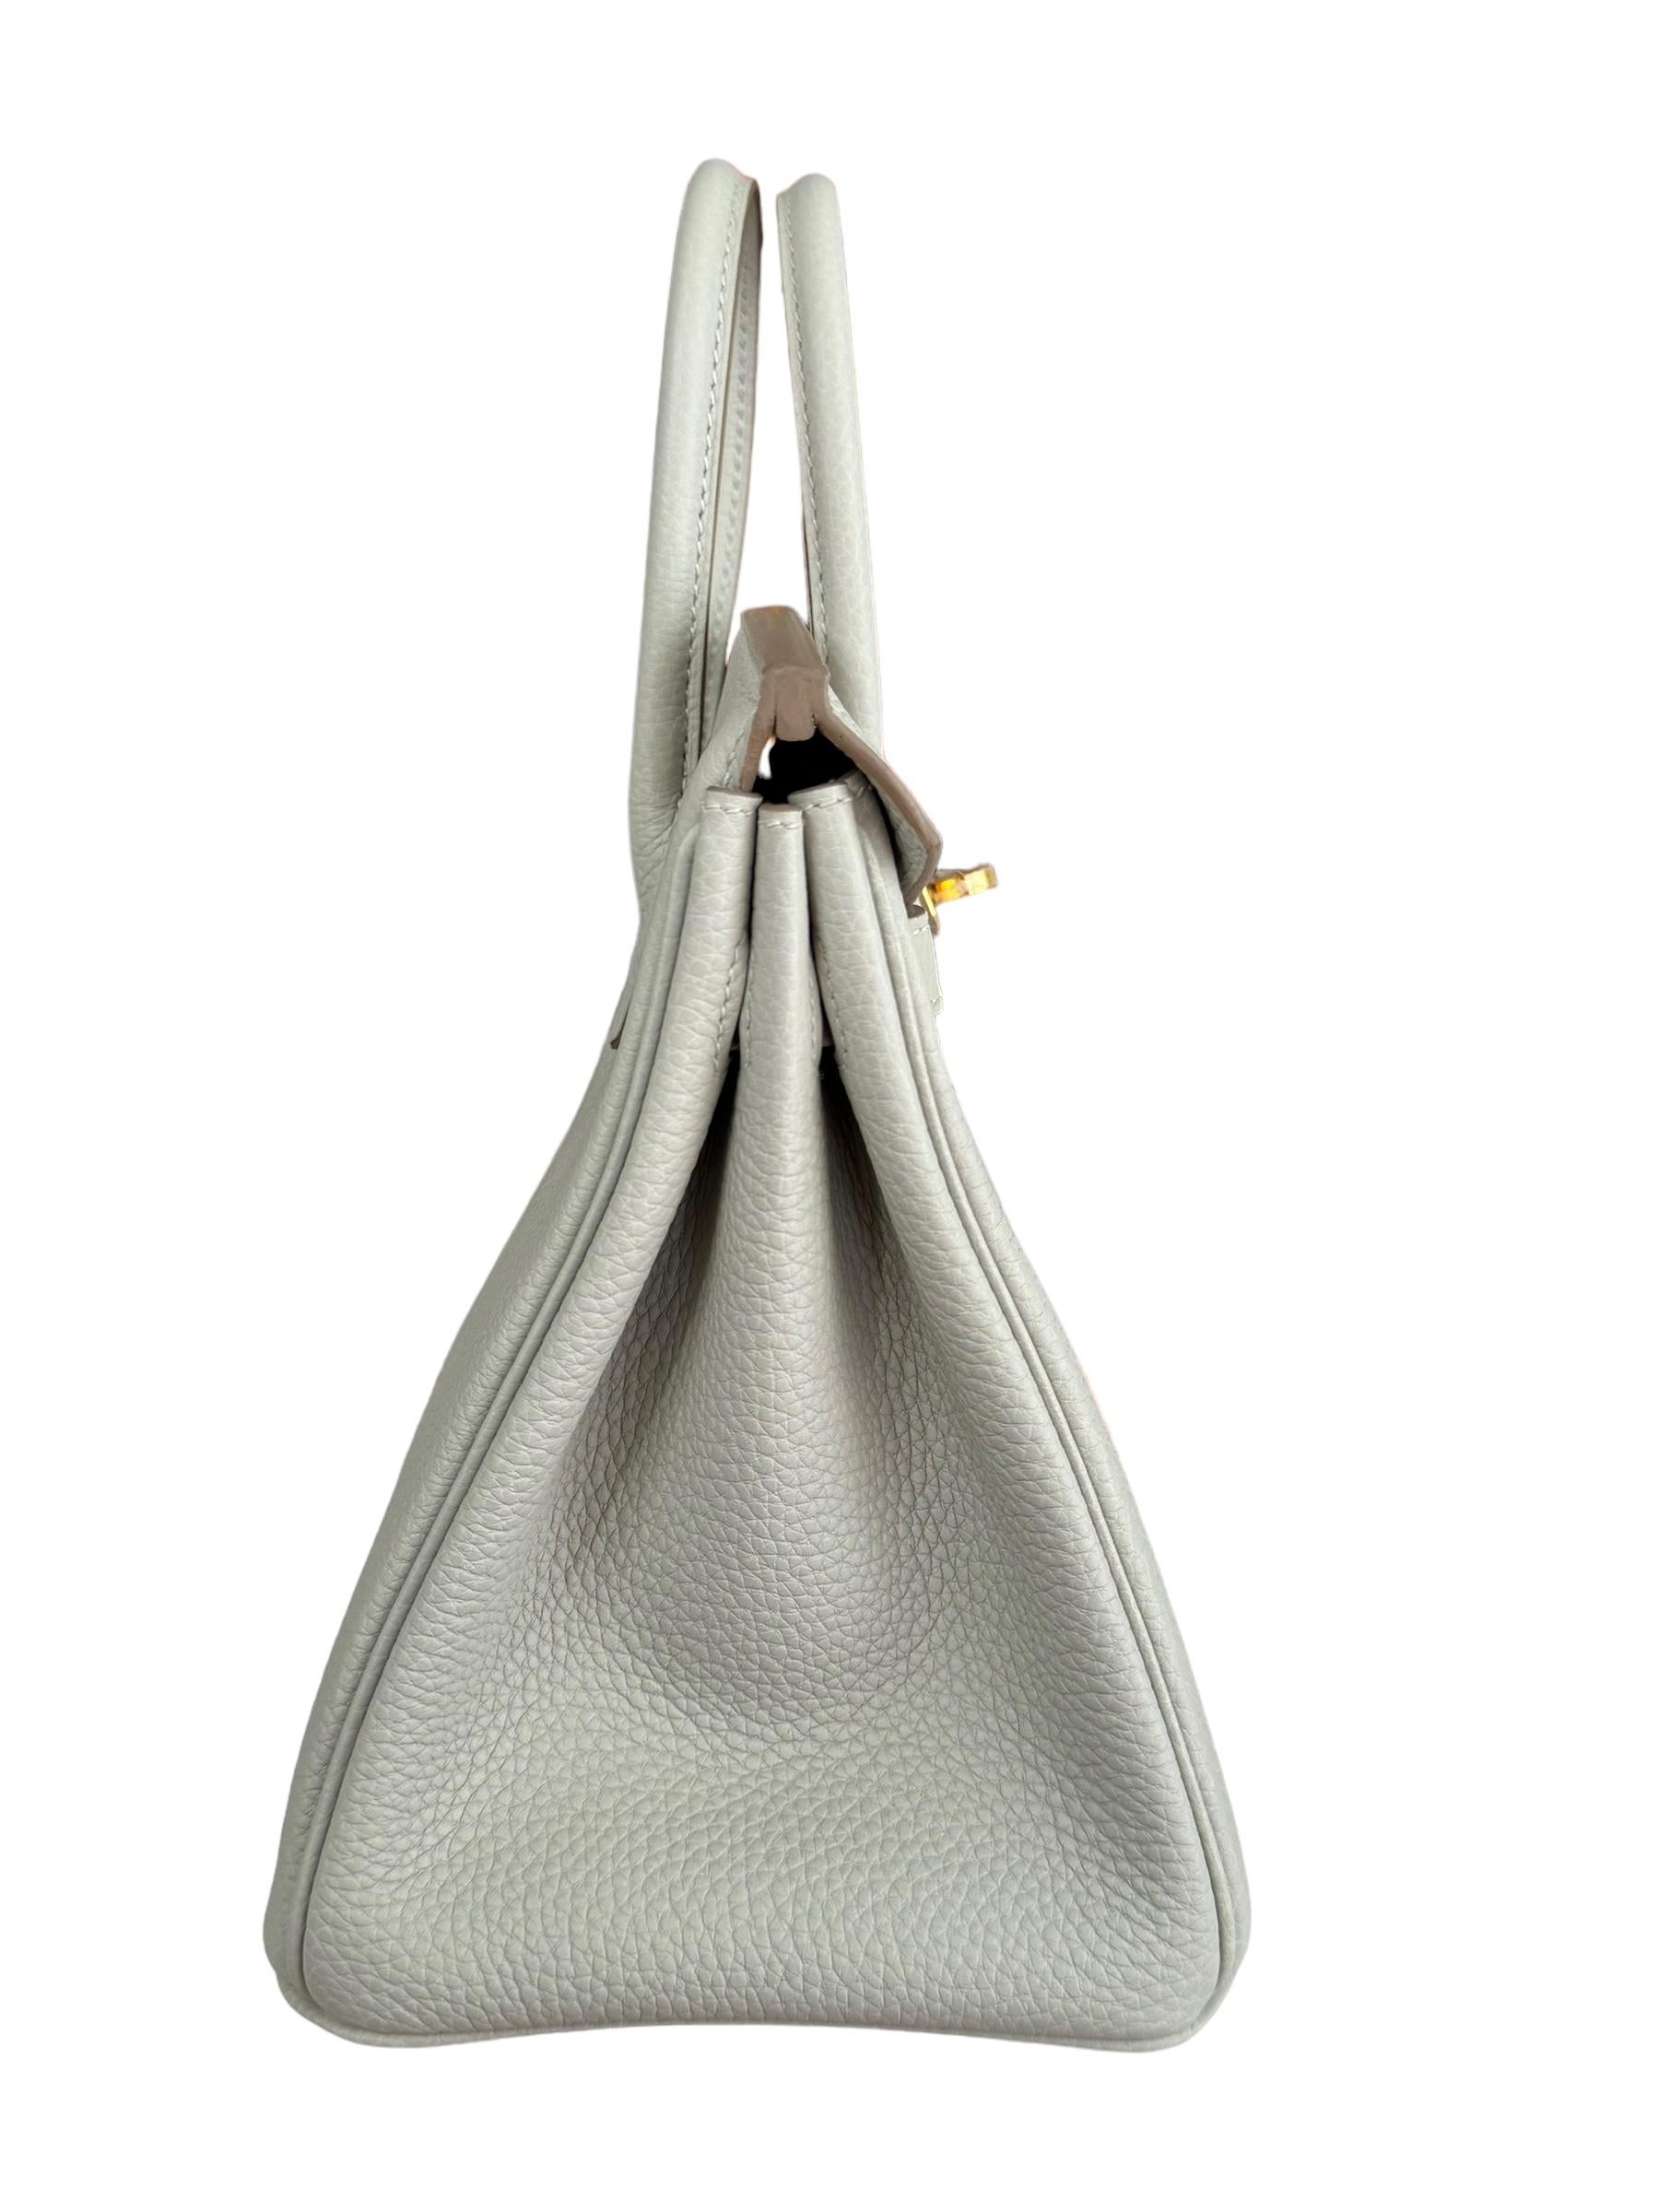 Hermes Birkin 25 Gris Perle Gray Togo Leather Handbag Gold Hardware NEW 3